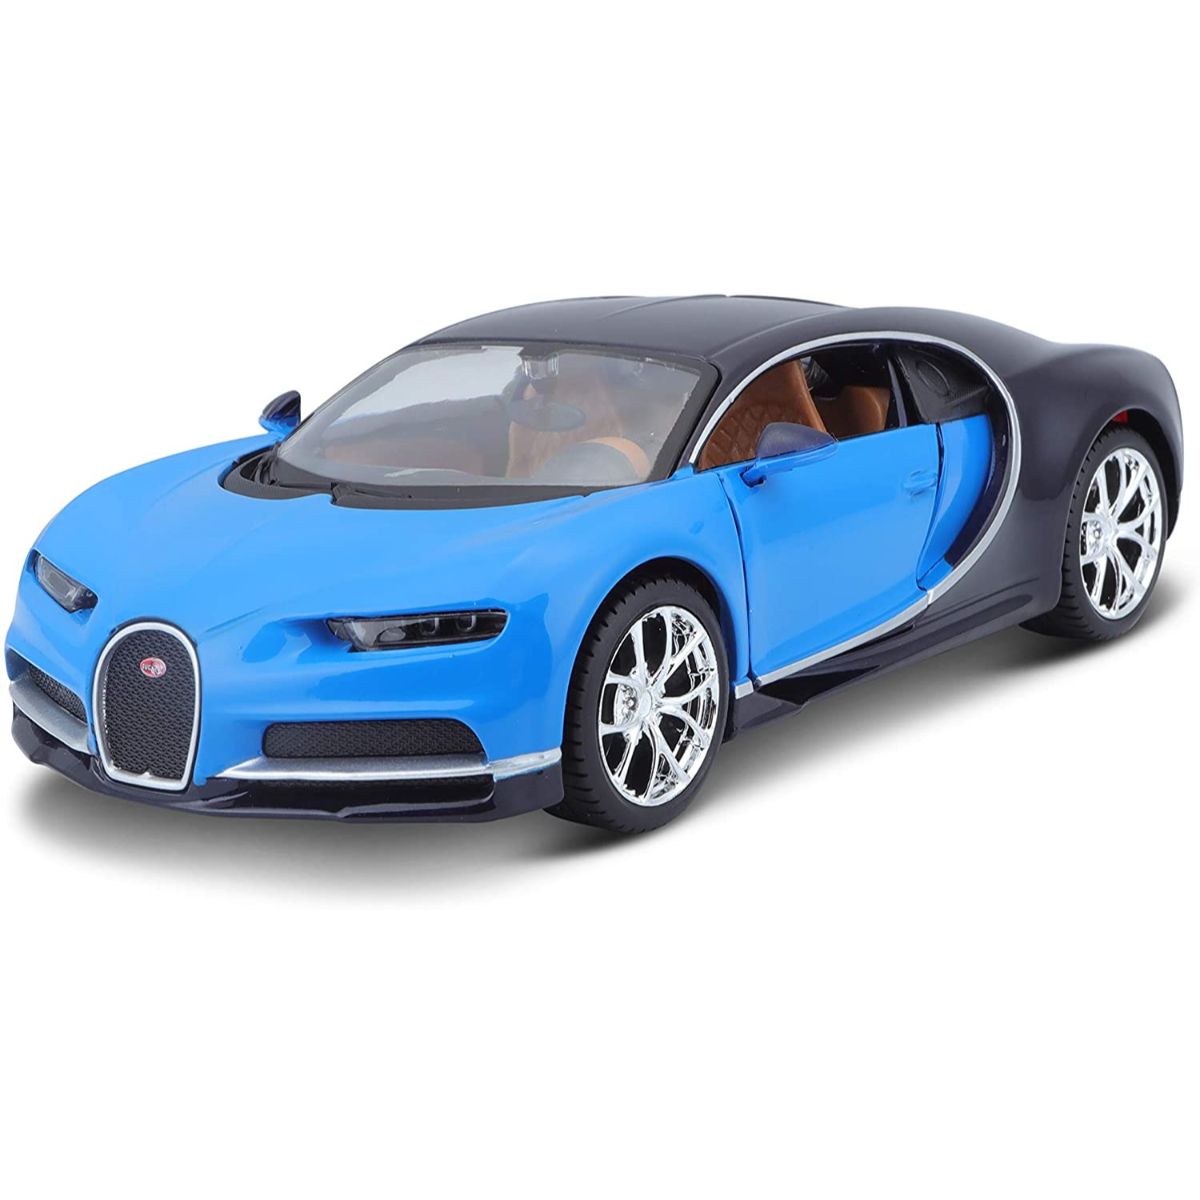 Masinuta Maisto Kit Asamblare Model Bugatti Chiron, 1:24, Albastru 1:24 imagine 2022 protejamcopilaria.ro